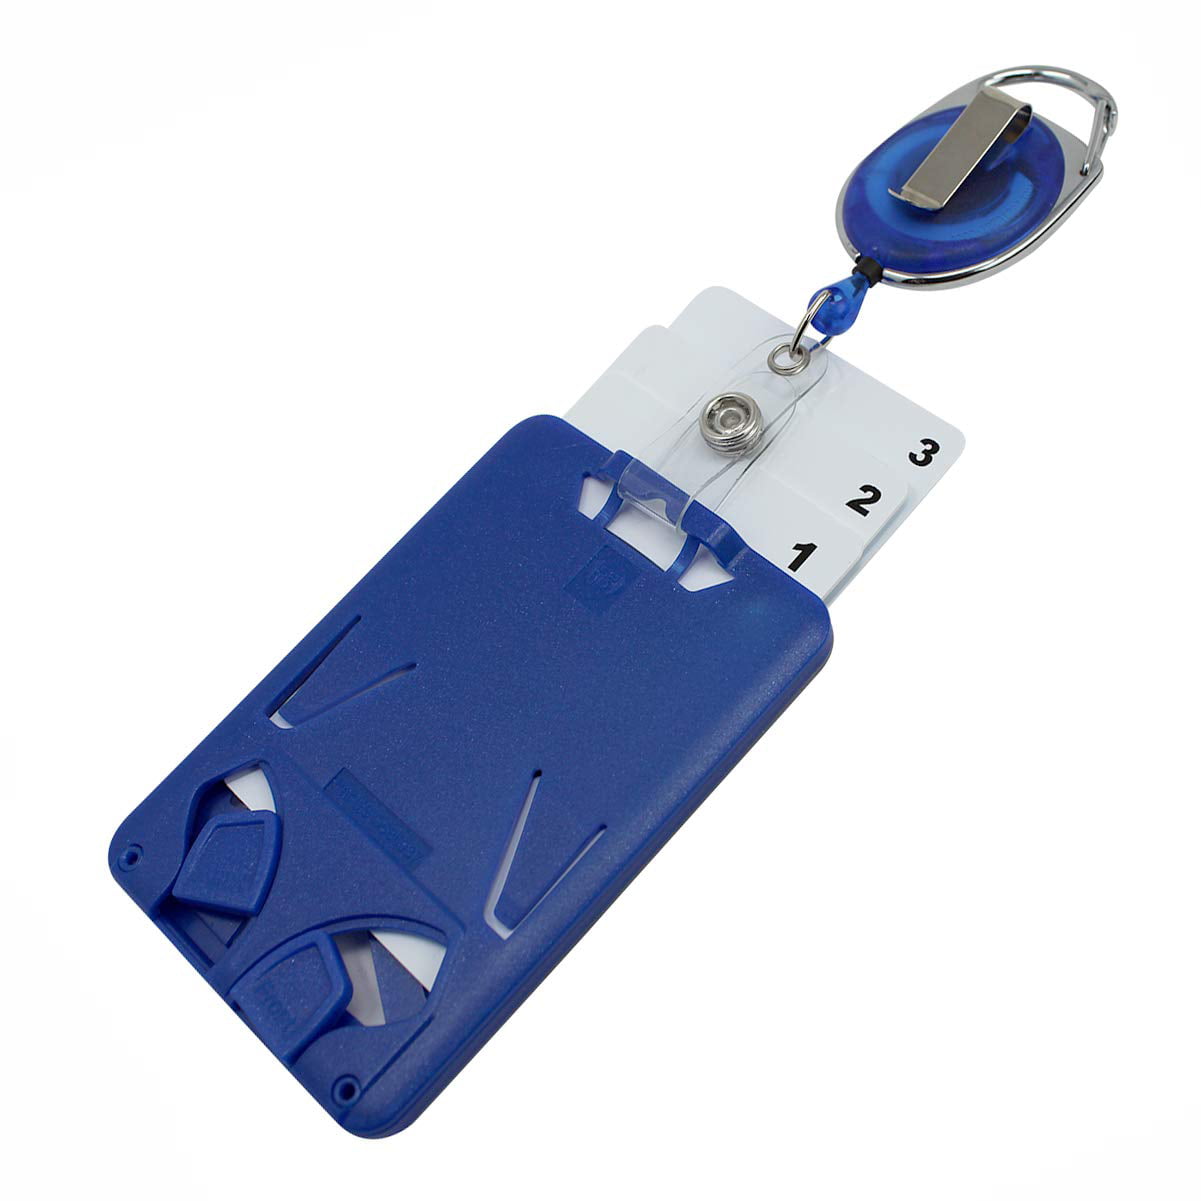 BAW Plastics Retractable ID Badge Holder: Heavy Duty with Nylon Cord Model: 2120-3310